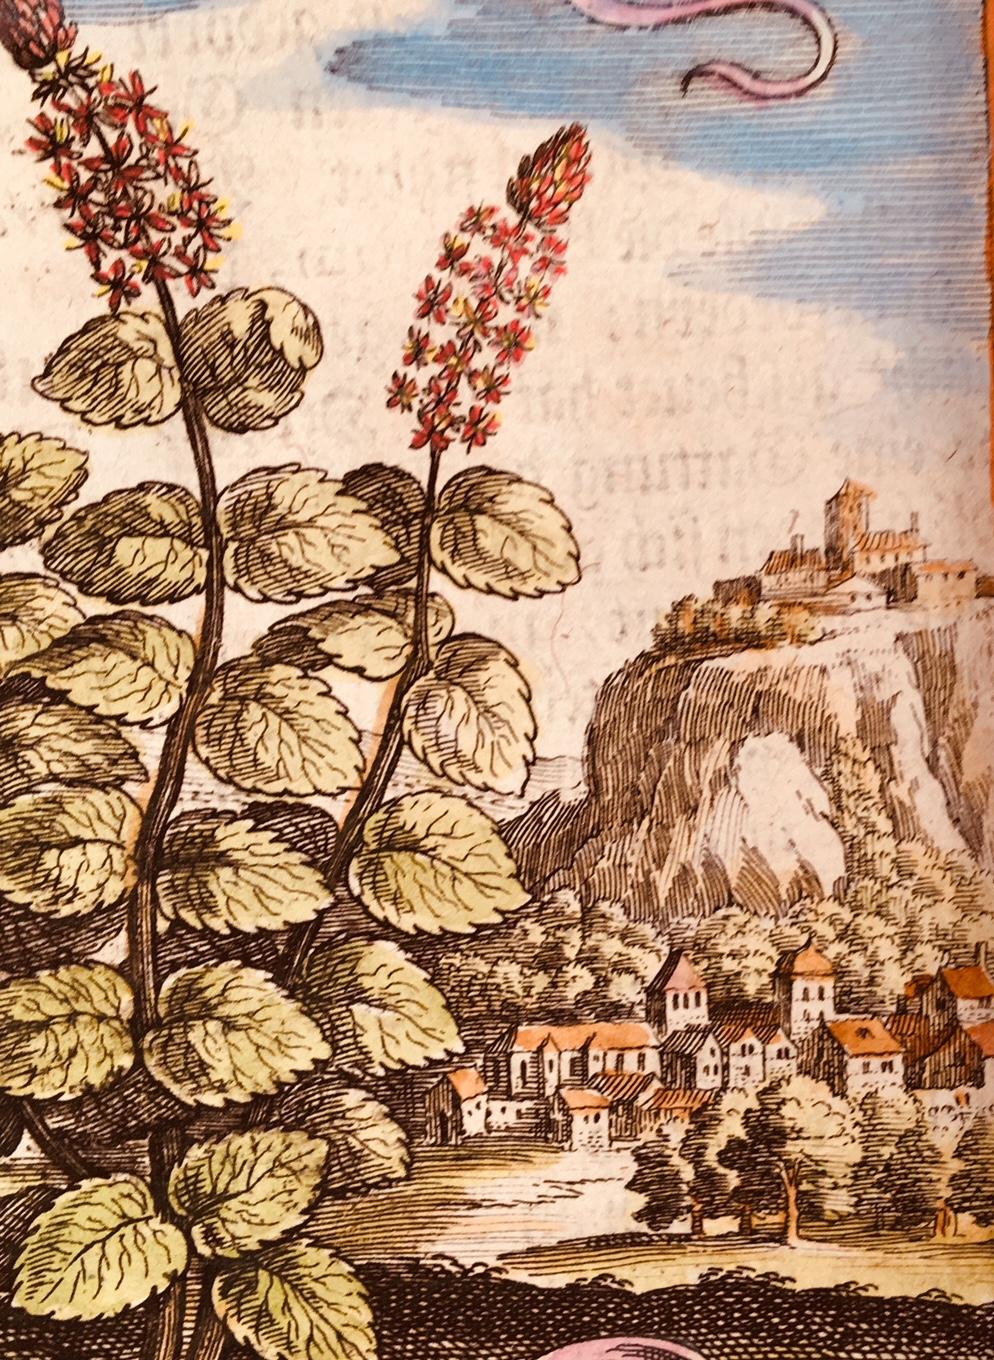 Mint in an 18th Century Landscape by Matthaeus Merian - Northern Renaissance Print by Unknown